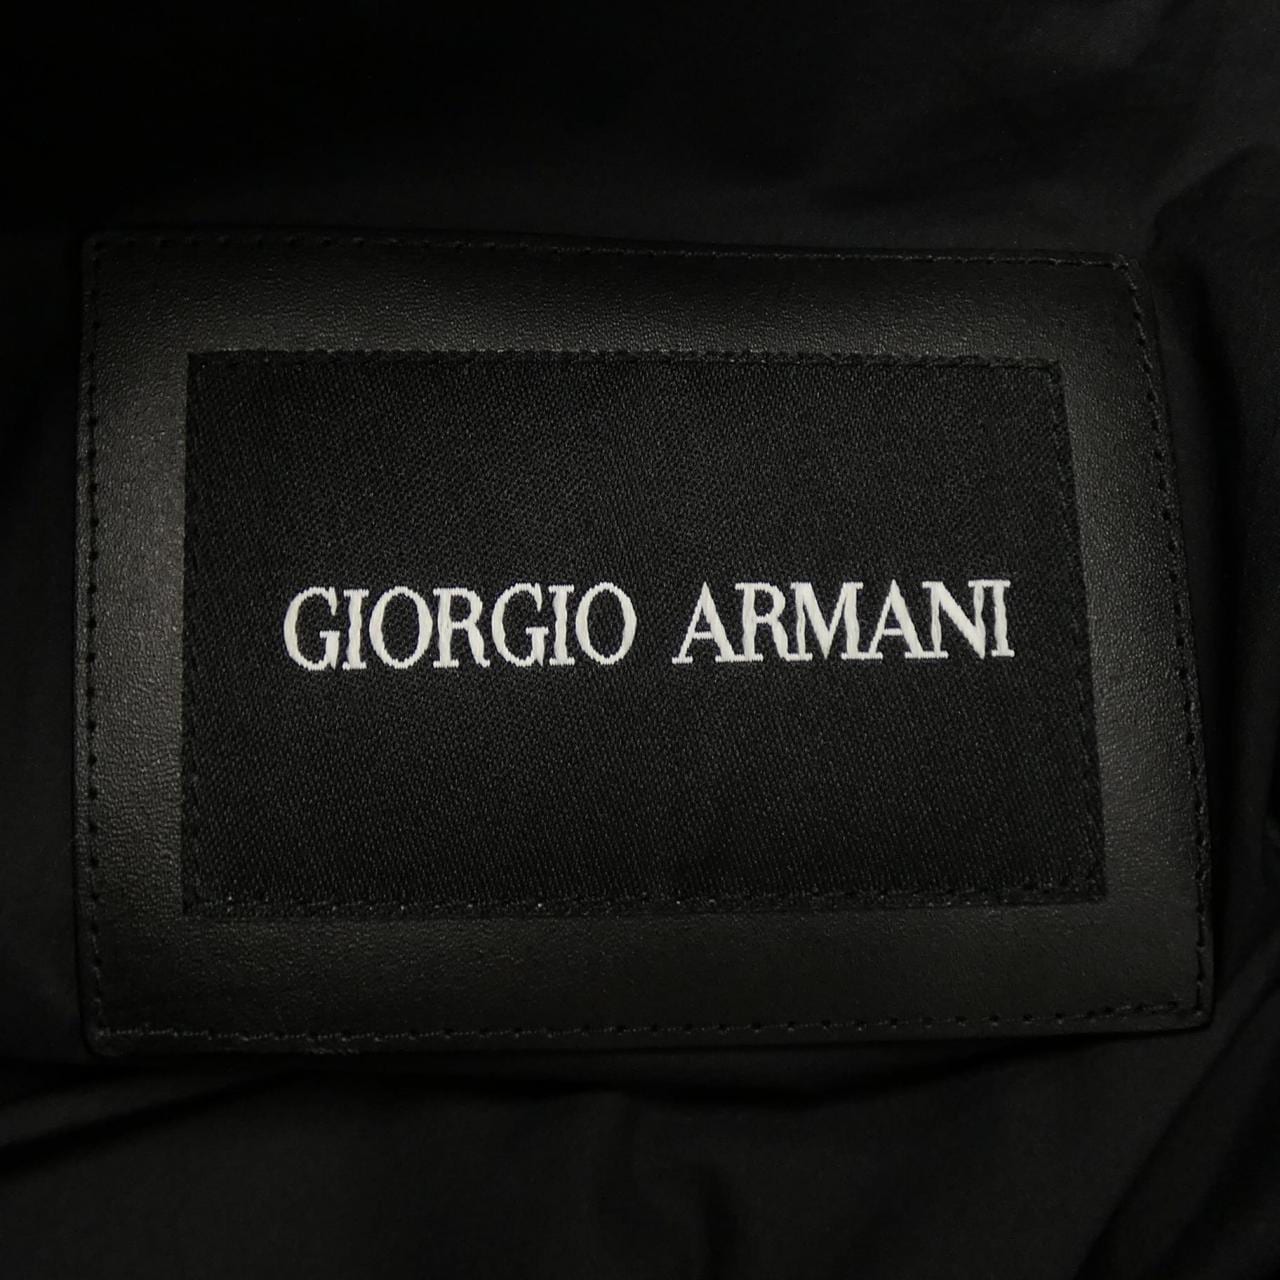 Giorgio Armani GIORGIO ARMANI羽絨服